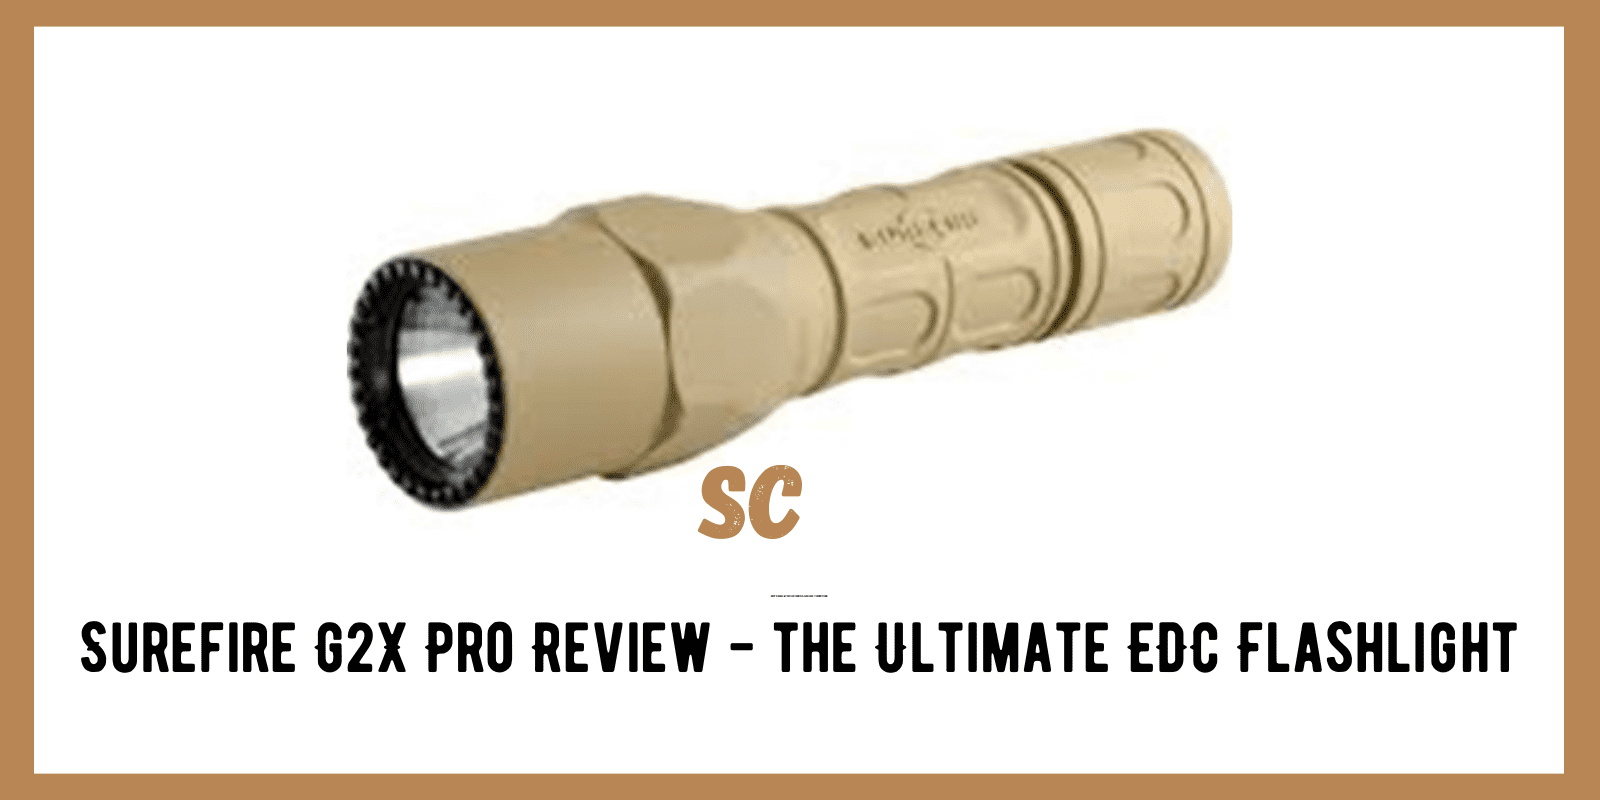 Surefire G2X Pro Review – the Ultimate EDC Flashlight?